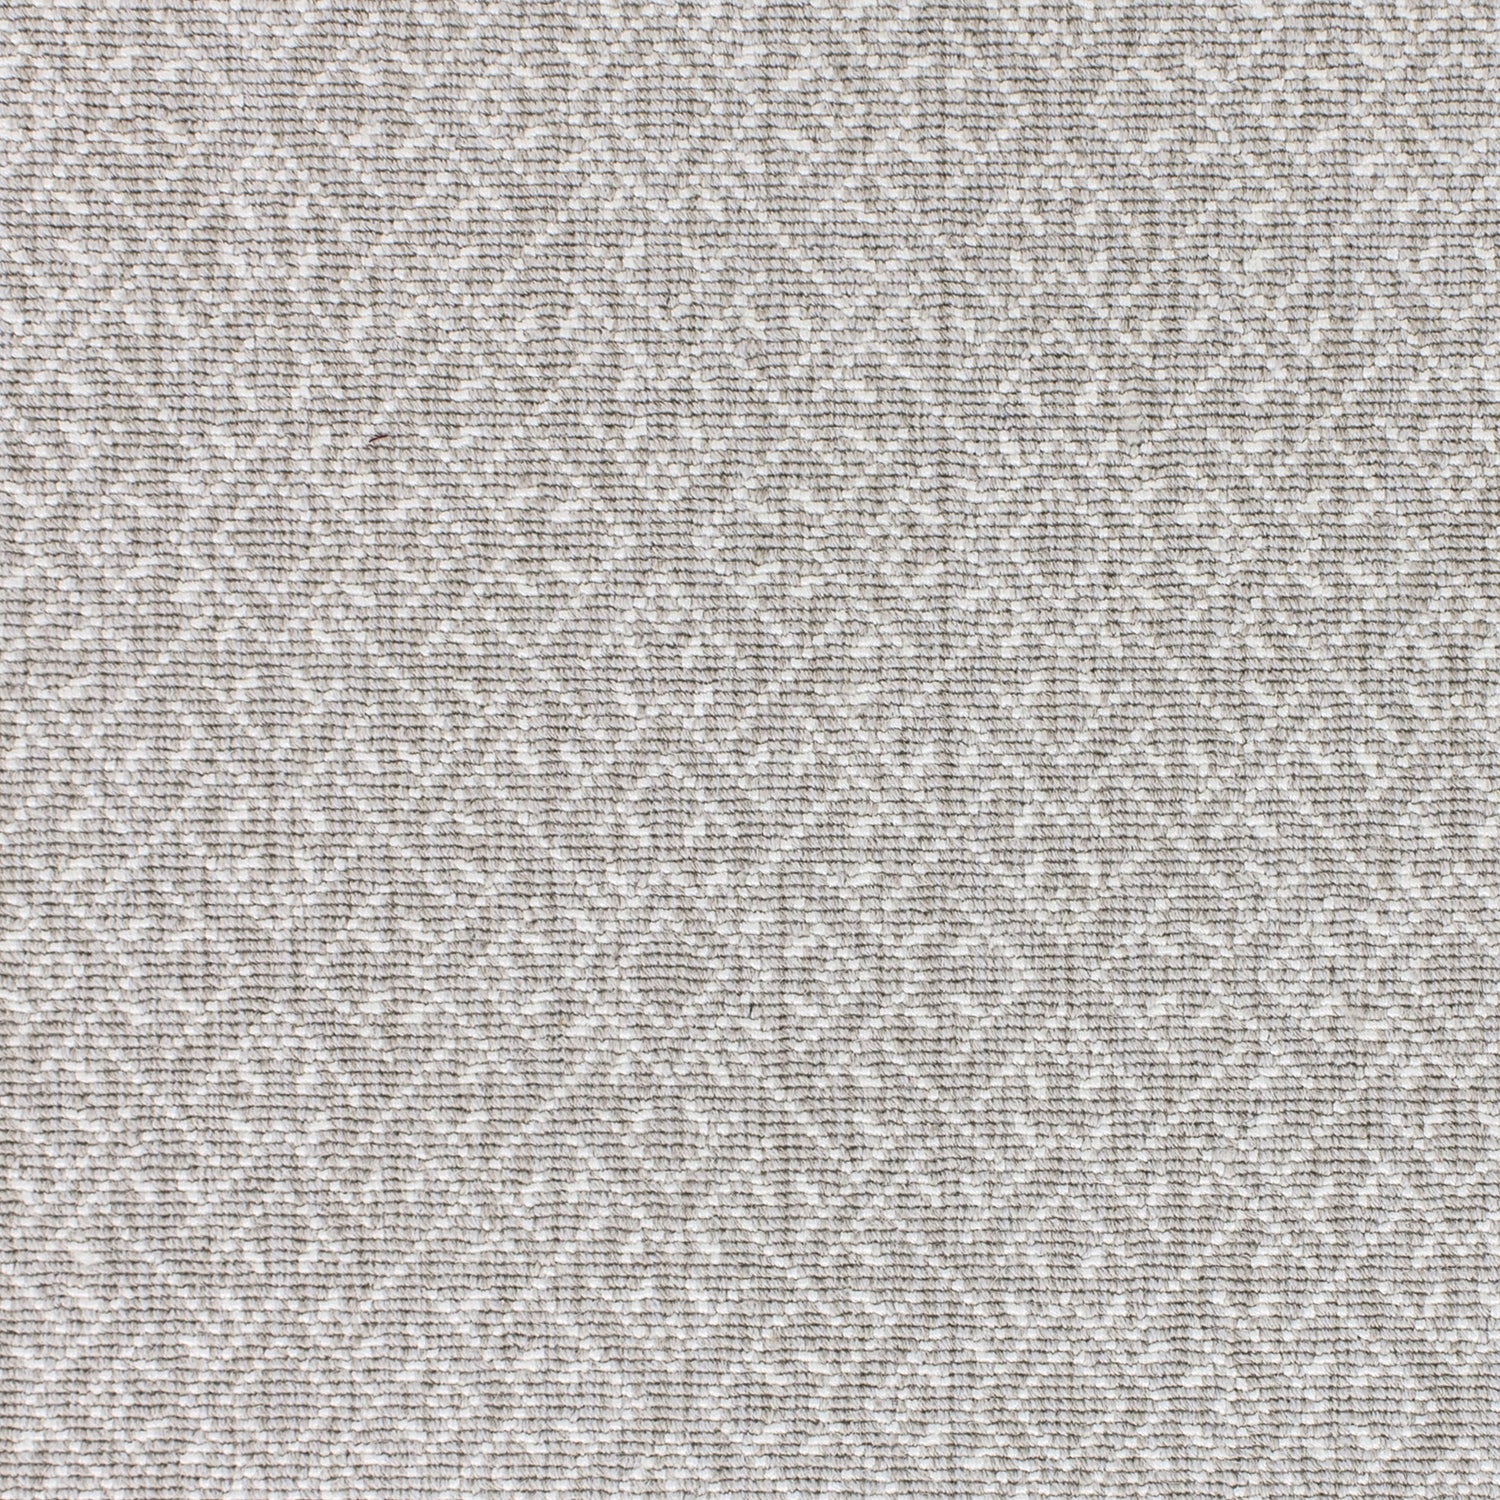 Wool-nylon broadloom carpet swatch in a geometric lattice print in cream and gray.